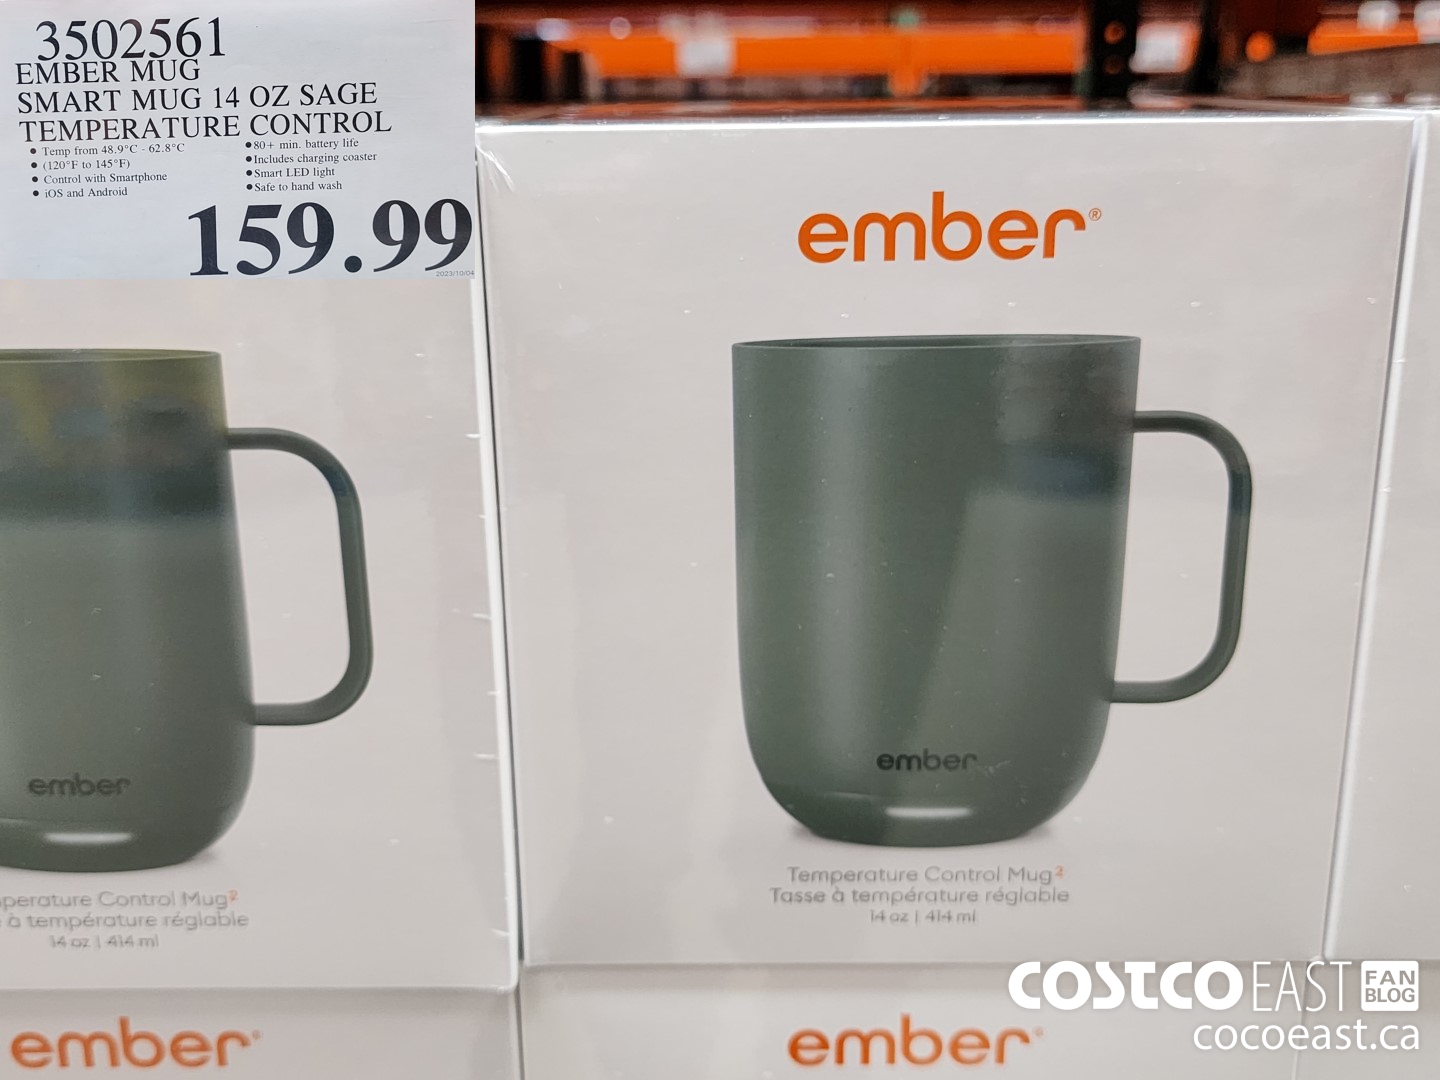 Costco Ember Mug 2, 14 oz, Temperature Control Smart Mug, Sage Green $99.99